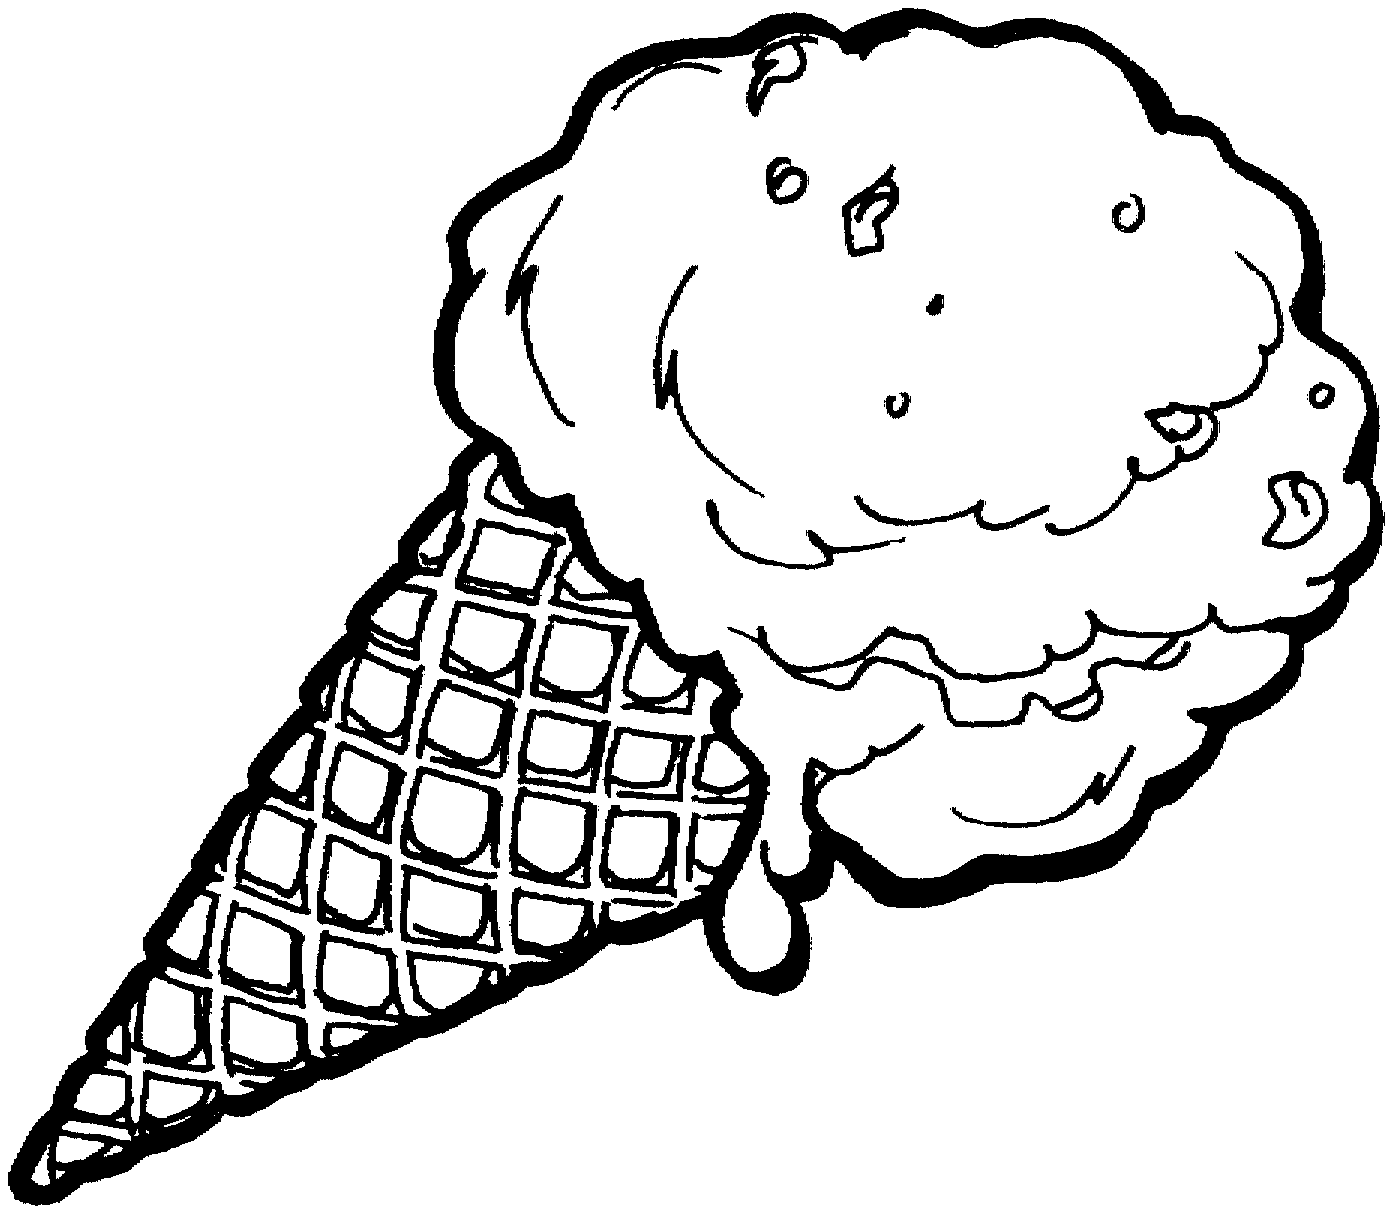 Melting ice cream cone clipart black and white clipartfest 4